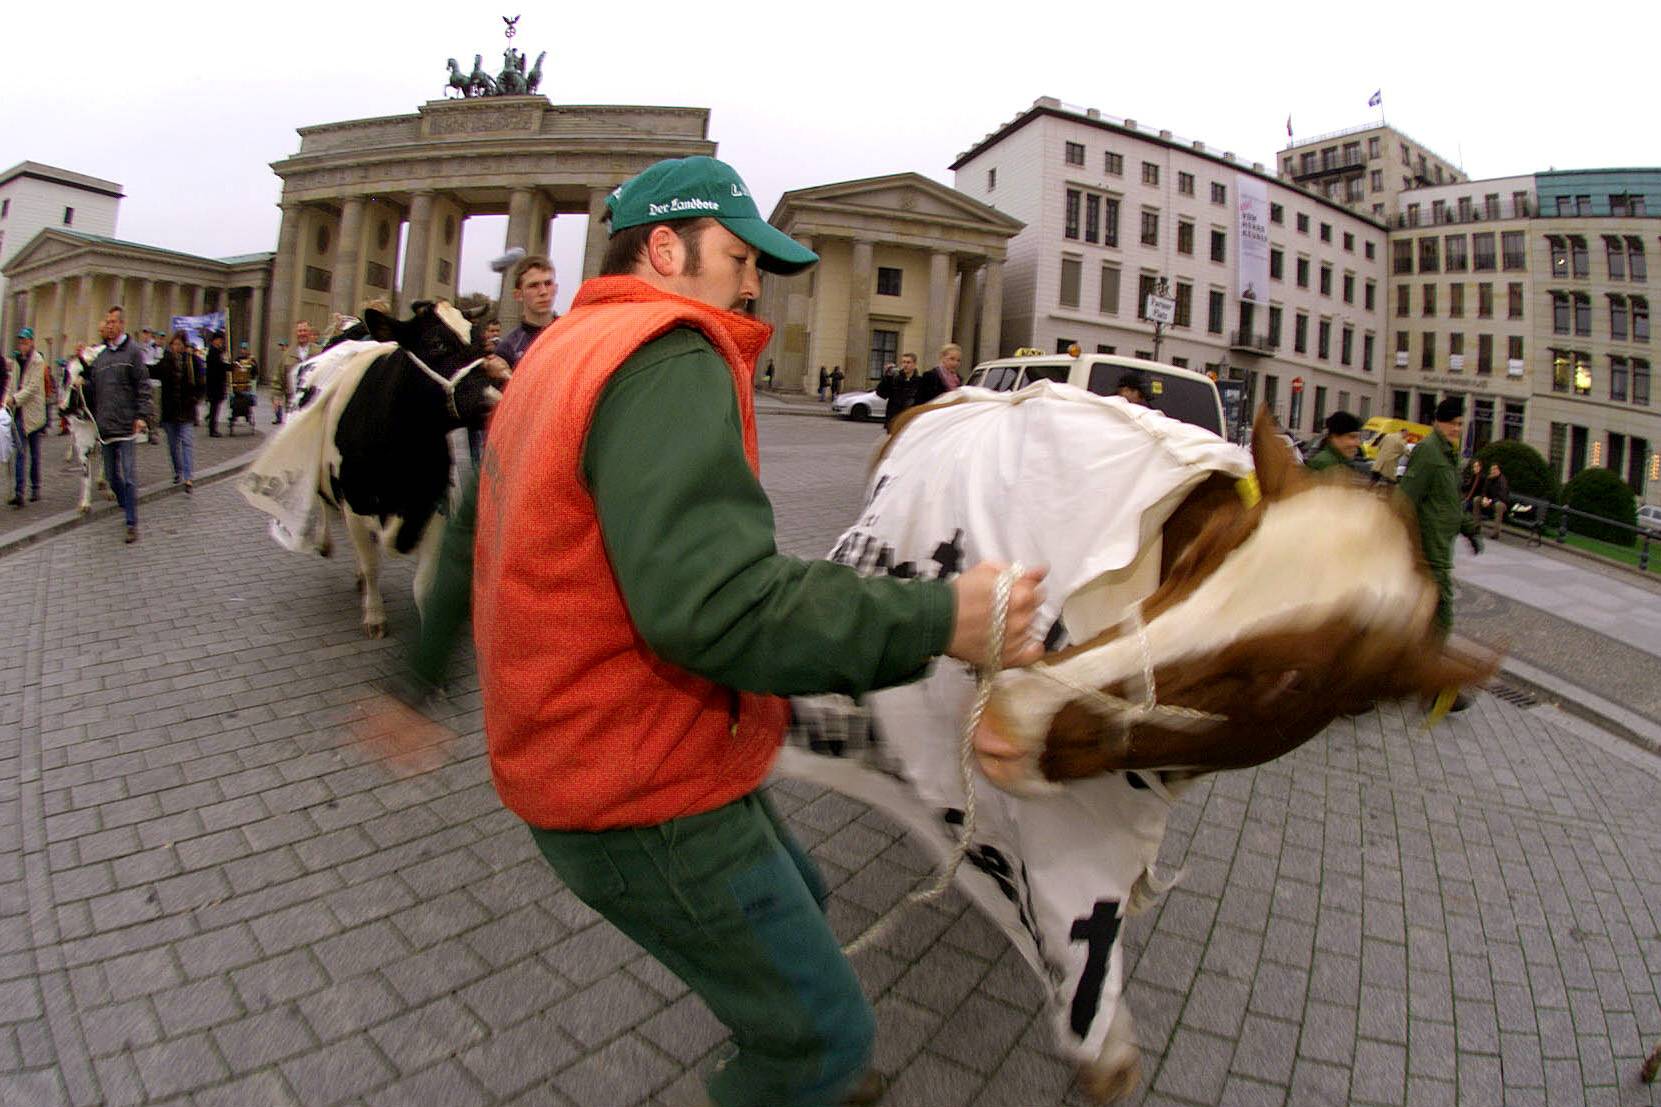 MIt Kuh statt Traktor,, Bauernproteste in Berlin im Herbst 2004. Foto: Imago/PEMAX